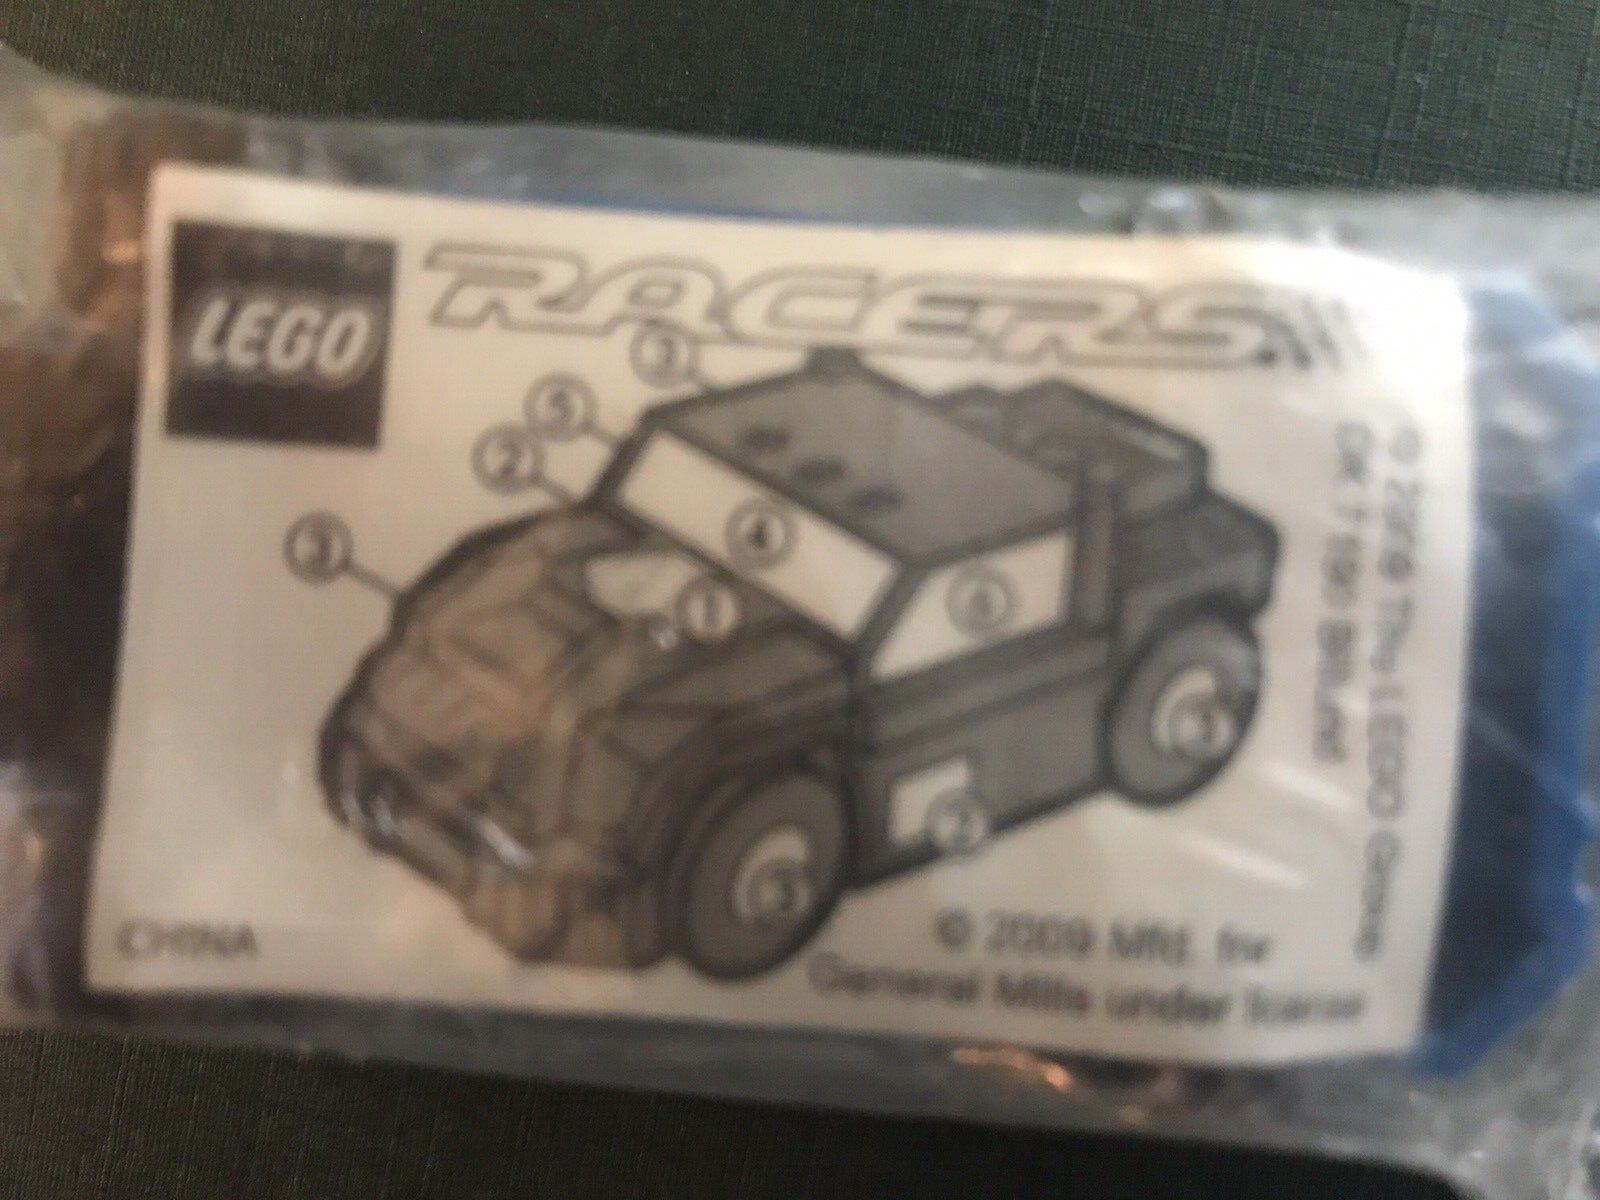 Lego Racers - 2009 DK 7190 Billund - Blue - General Mills. New in Package.